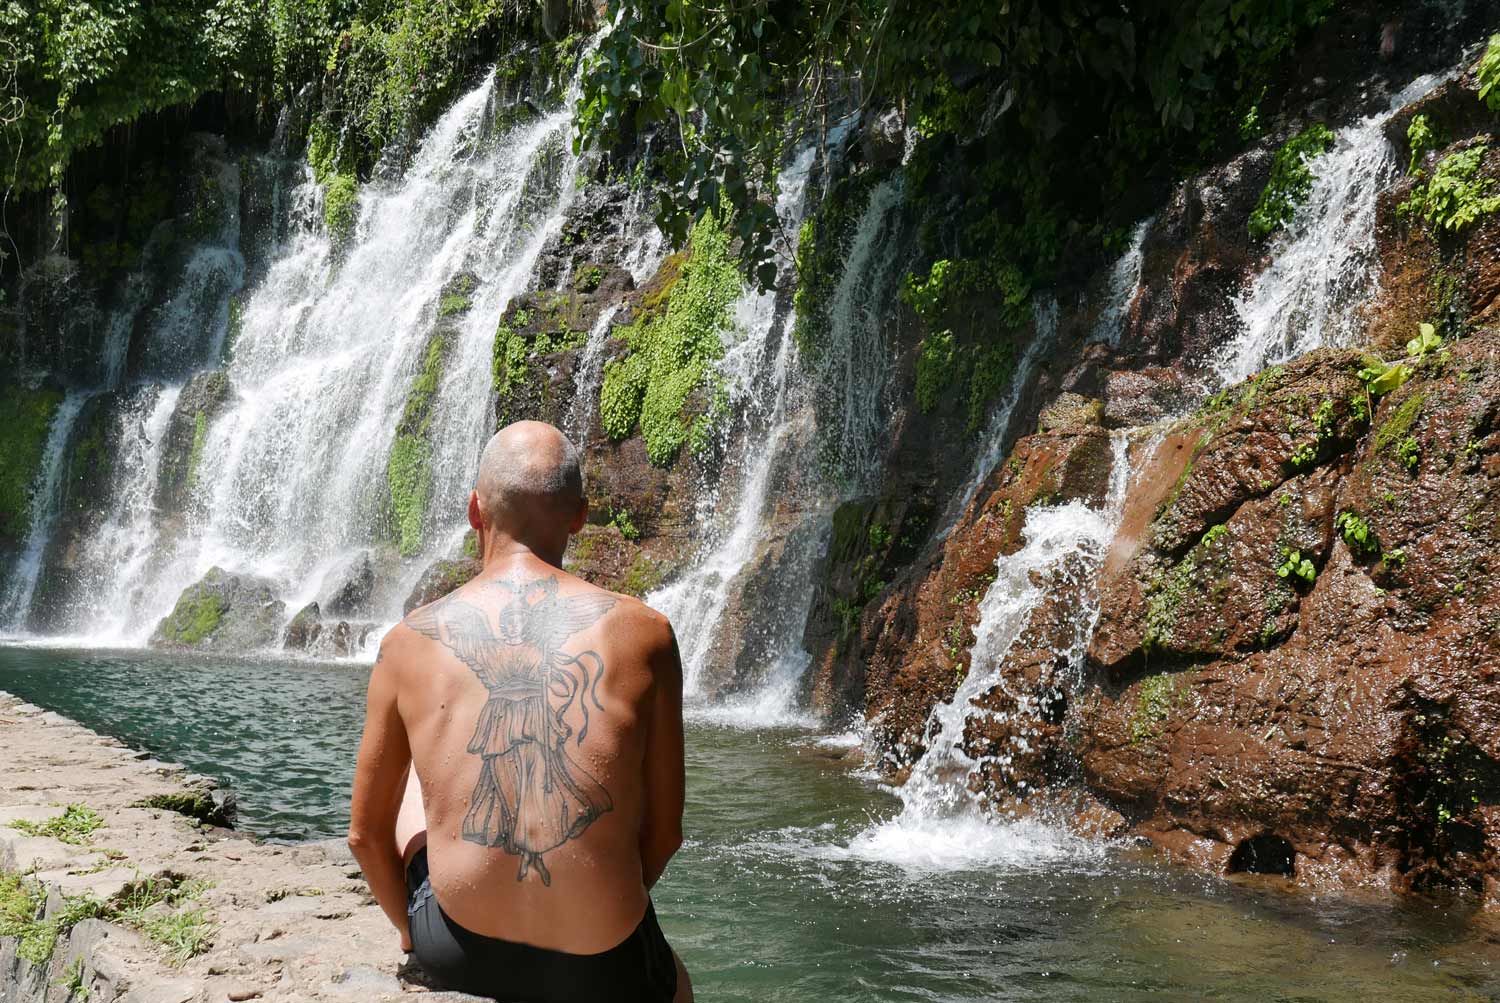 Yours truly in one of the Los Chorros waterfalls near Juayua, El Salvador